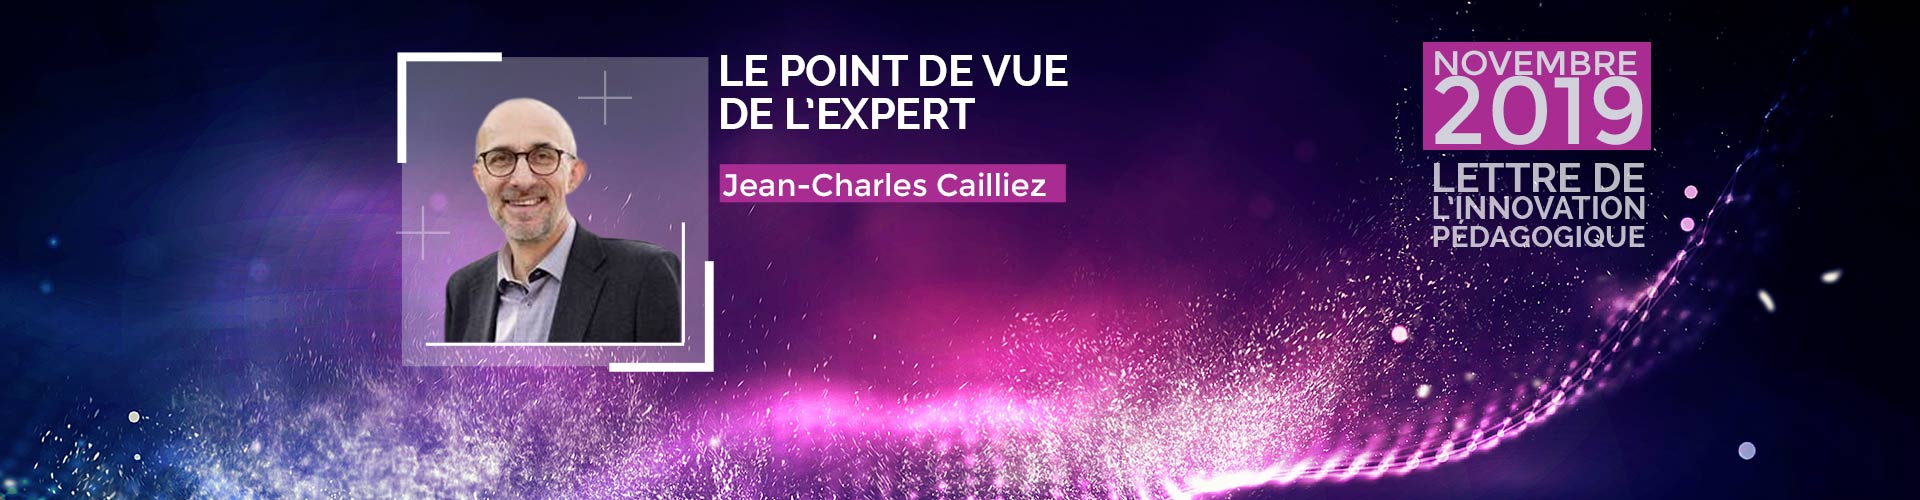 Entretien avec Jean-Charles Cailliez professseur - Expert design thinking